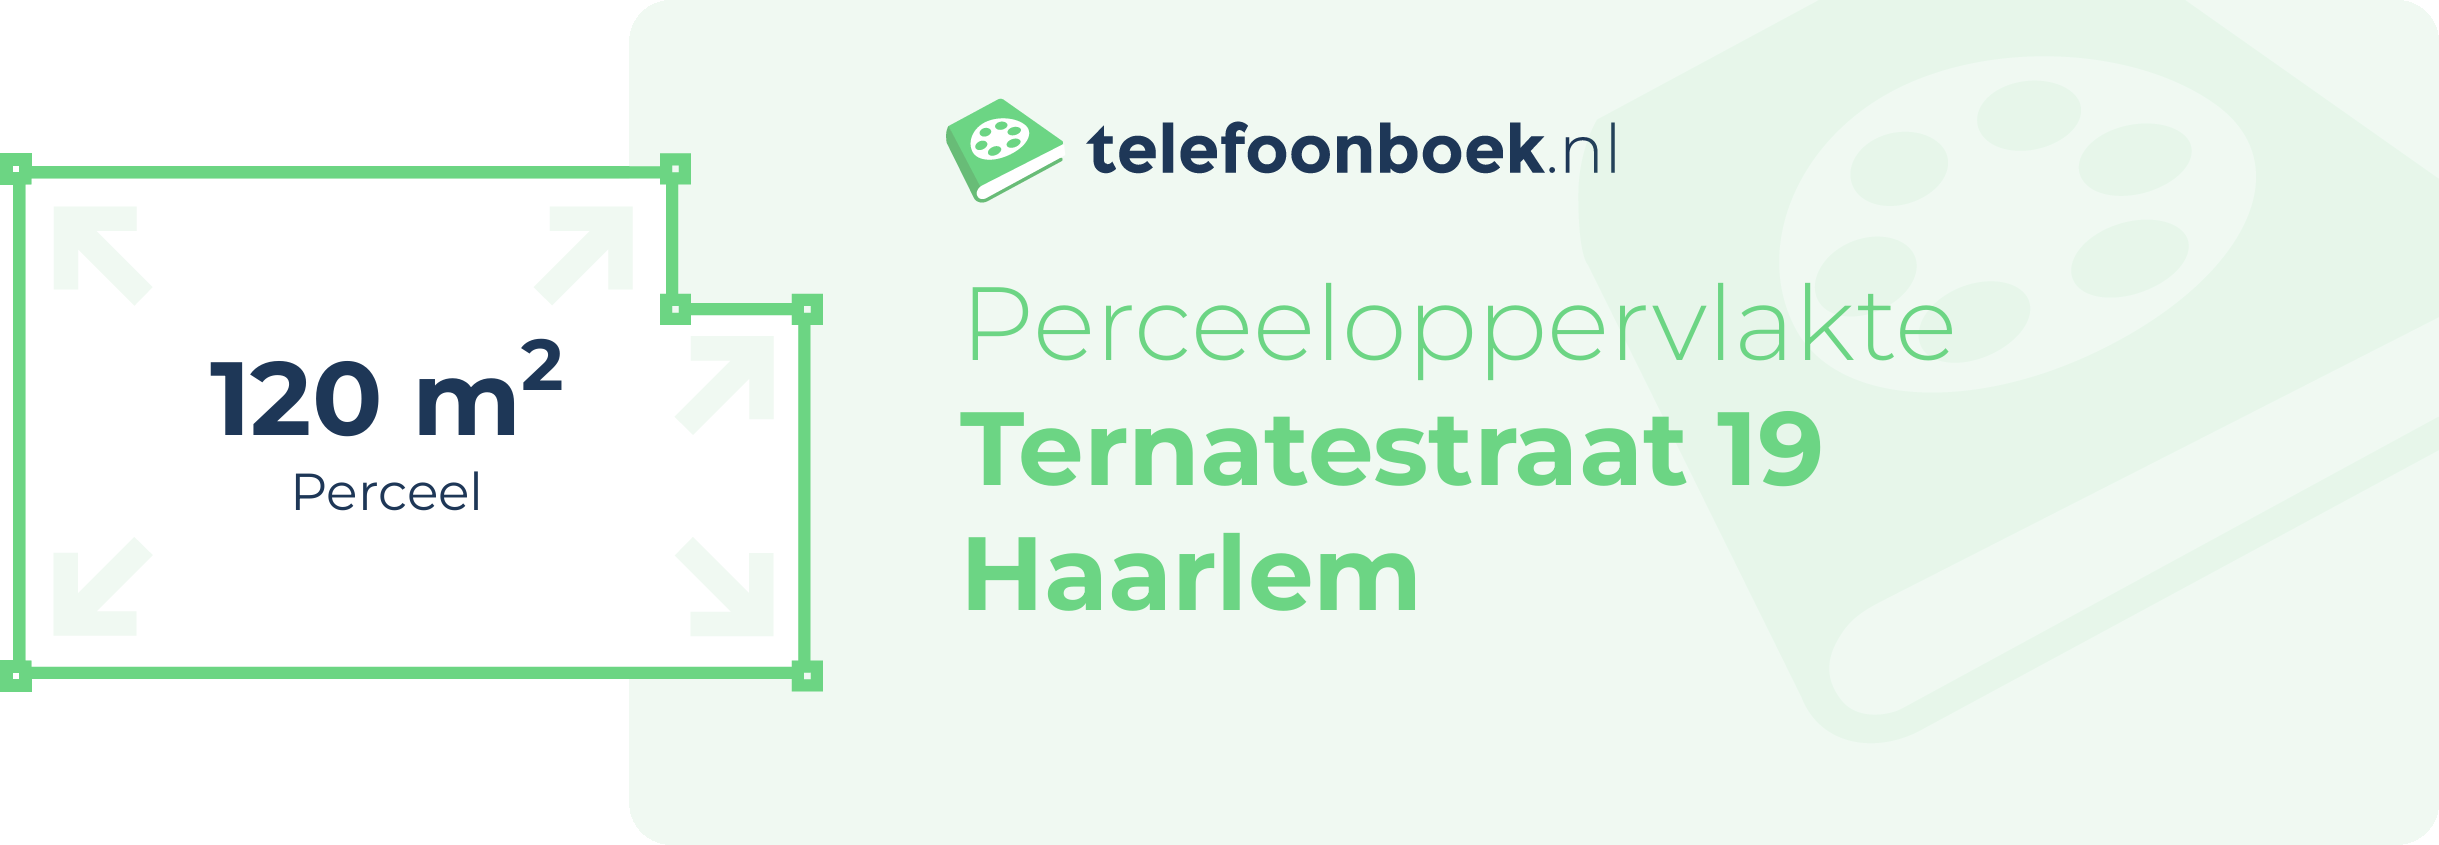 Perceeloppervlakte Ternatestraat 19 Haarlem